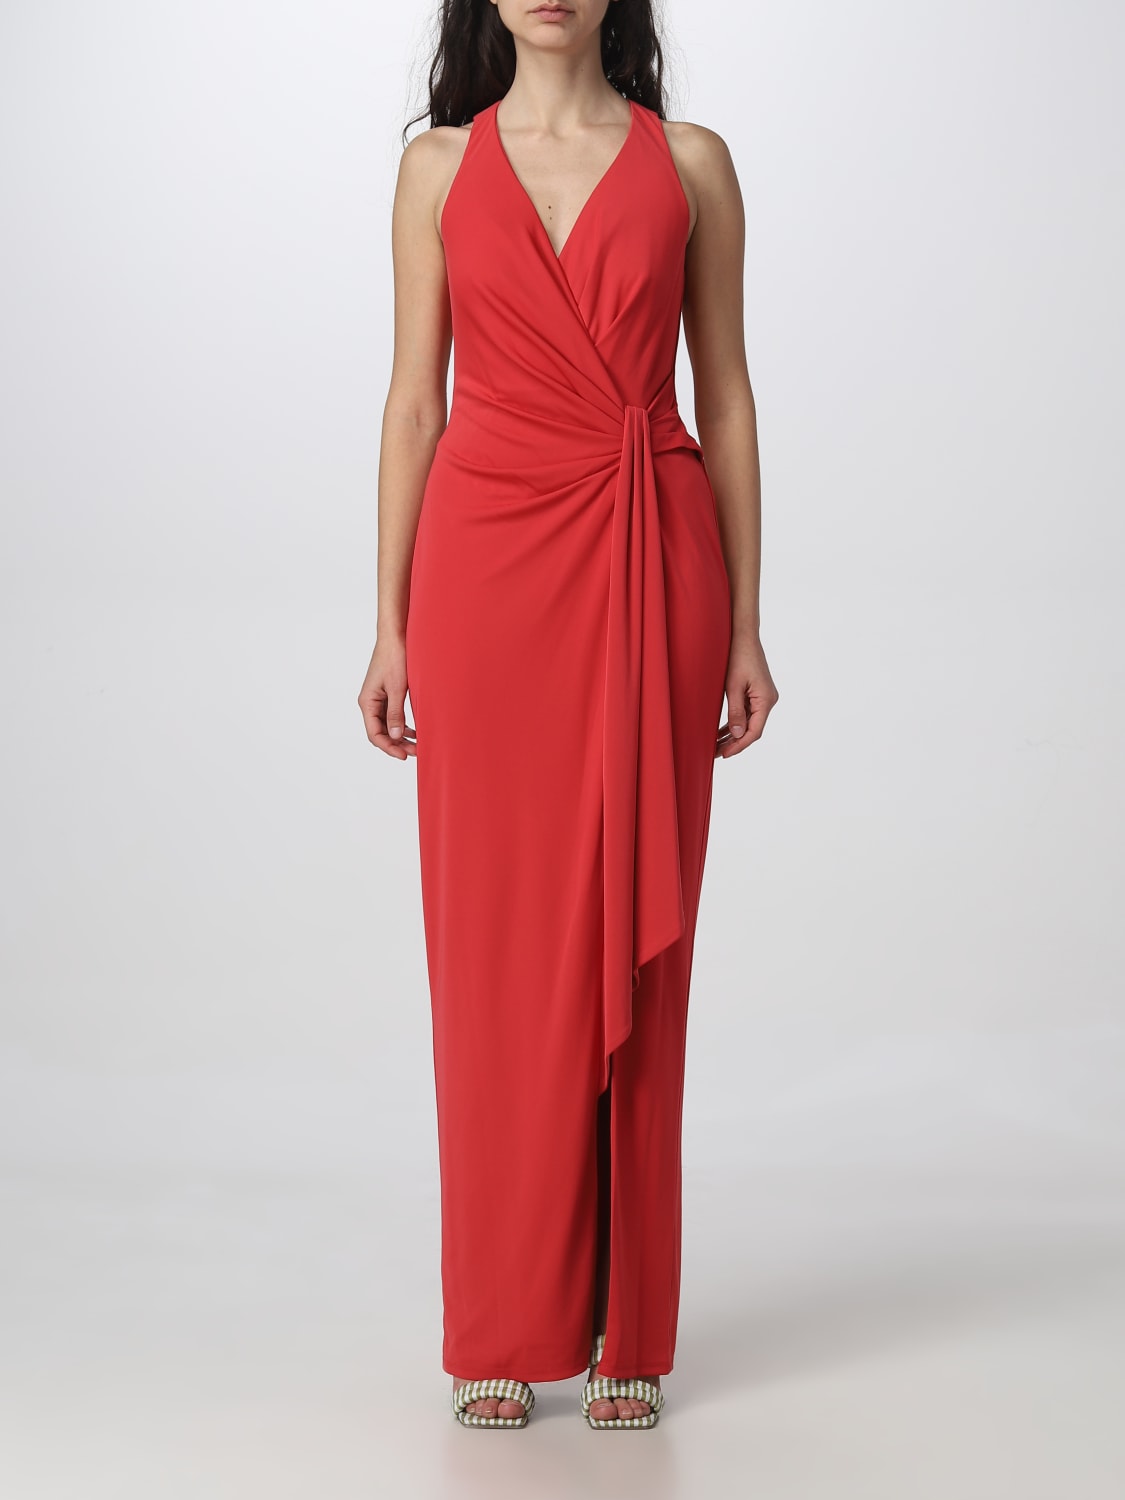 Lauren Ralph Lauren Outlet: dress for woman - Red | Lauren Ralph